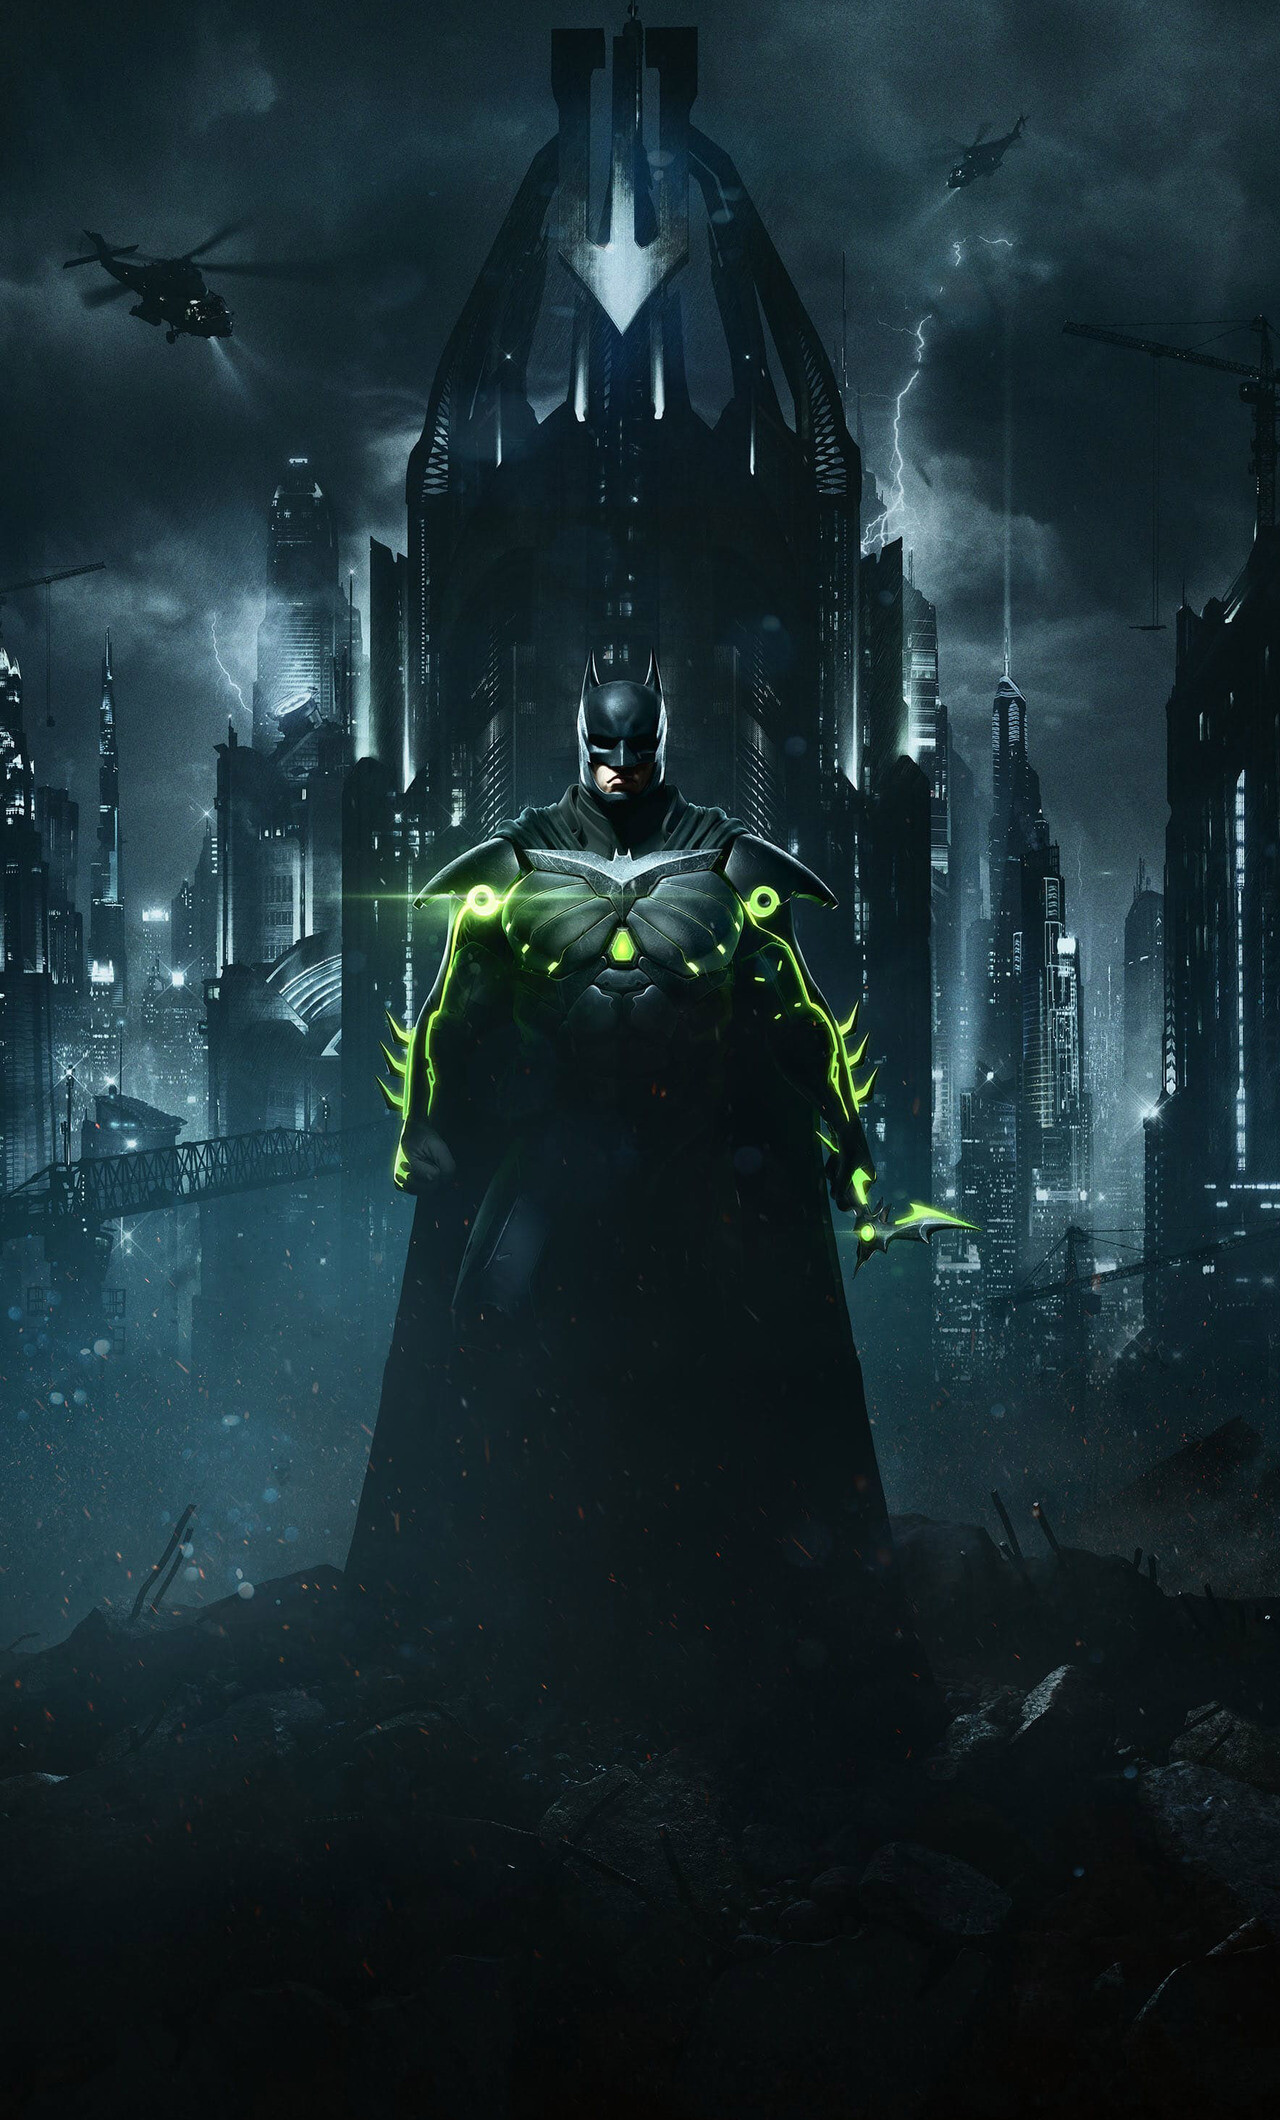 Batman in Injustice 2 on iPhone, HD 4K wallpapers, Dark Knight returns, Mobile gaming, 1280x2120 HD Phone